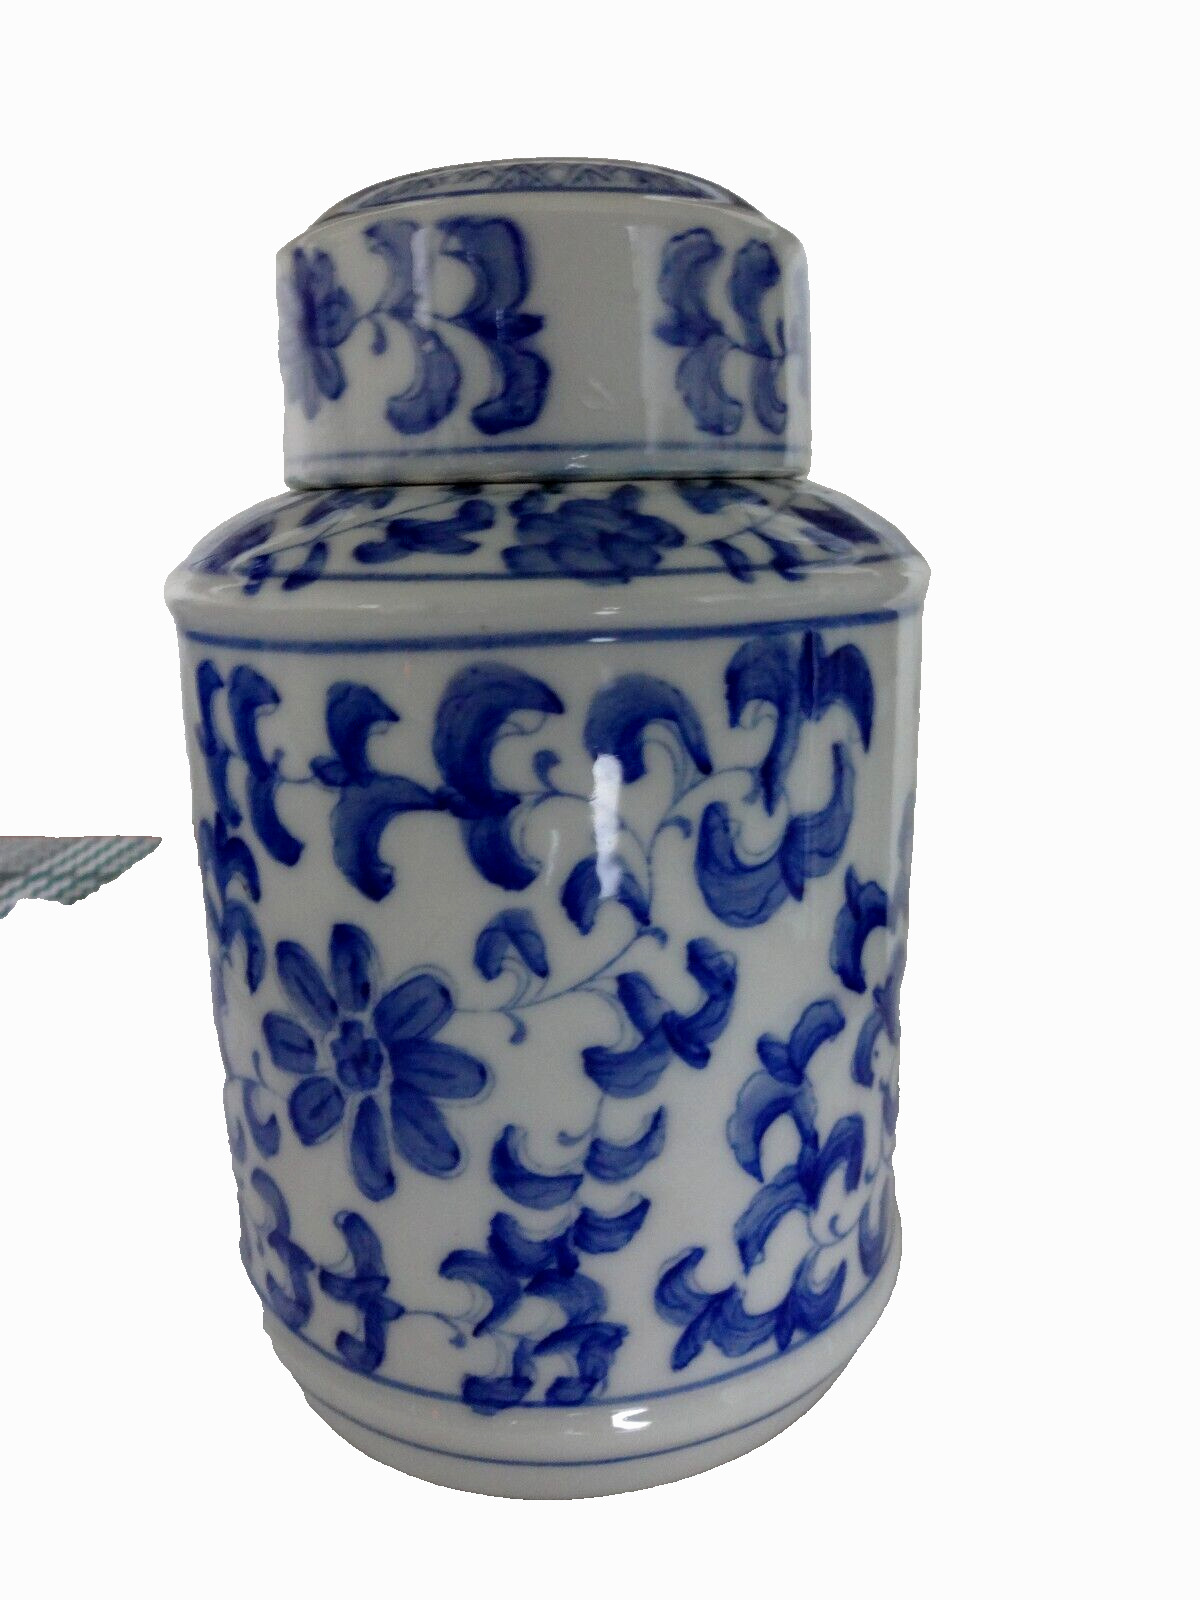 Antique White Chinese Porcelain Blue Floral Decoration Cylinder Tea Caddy Jar